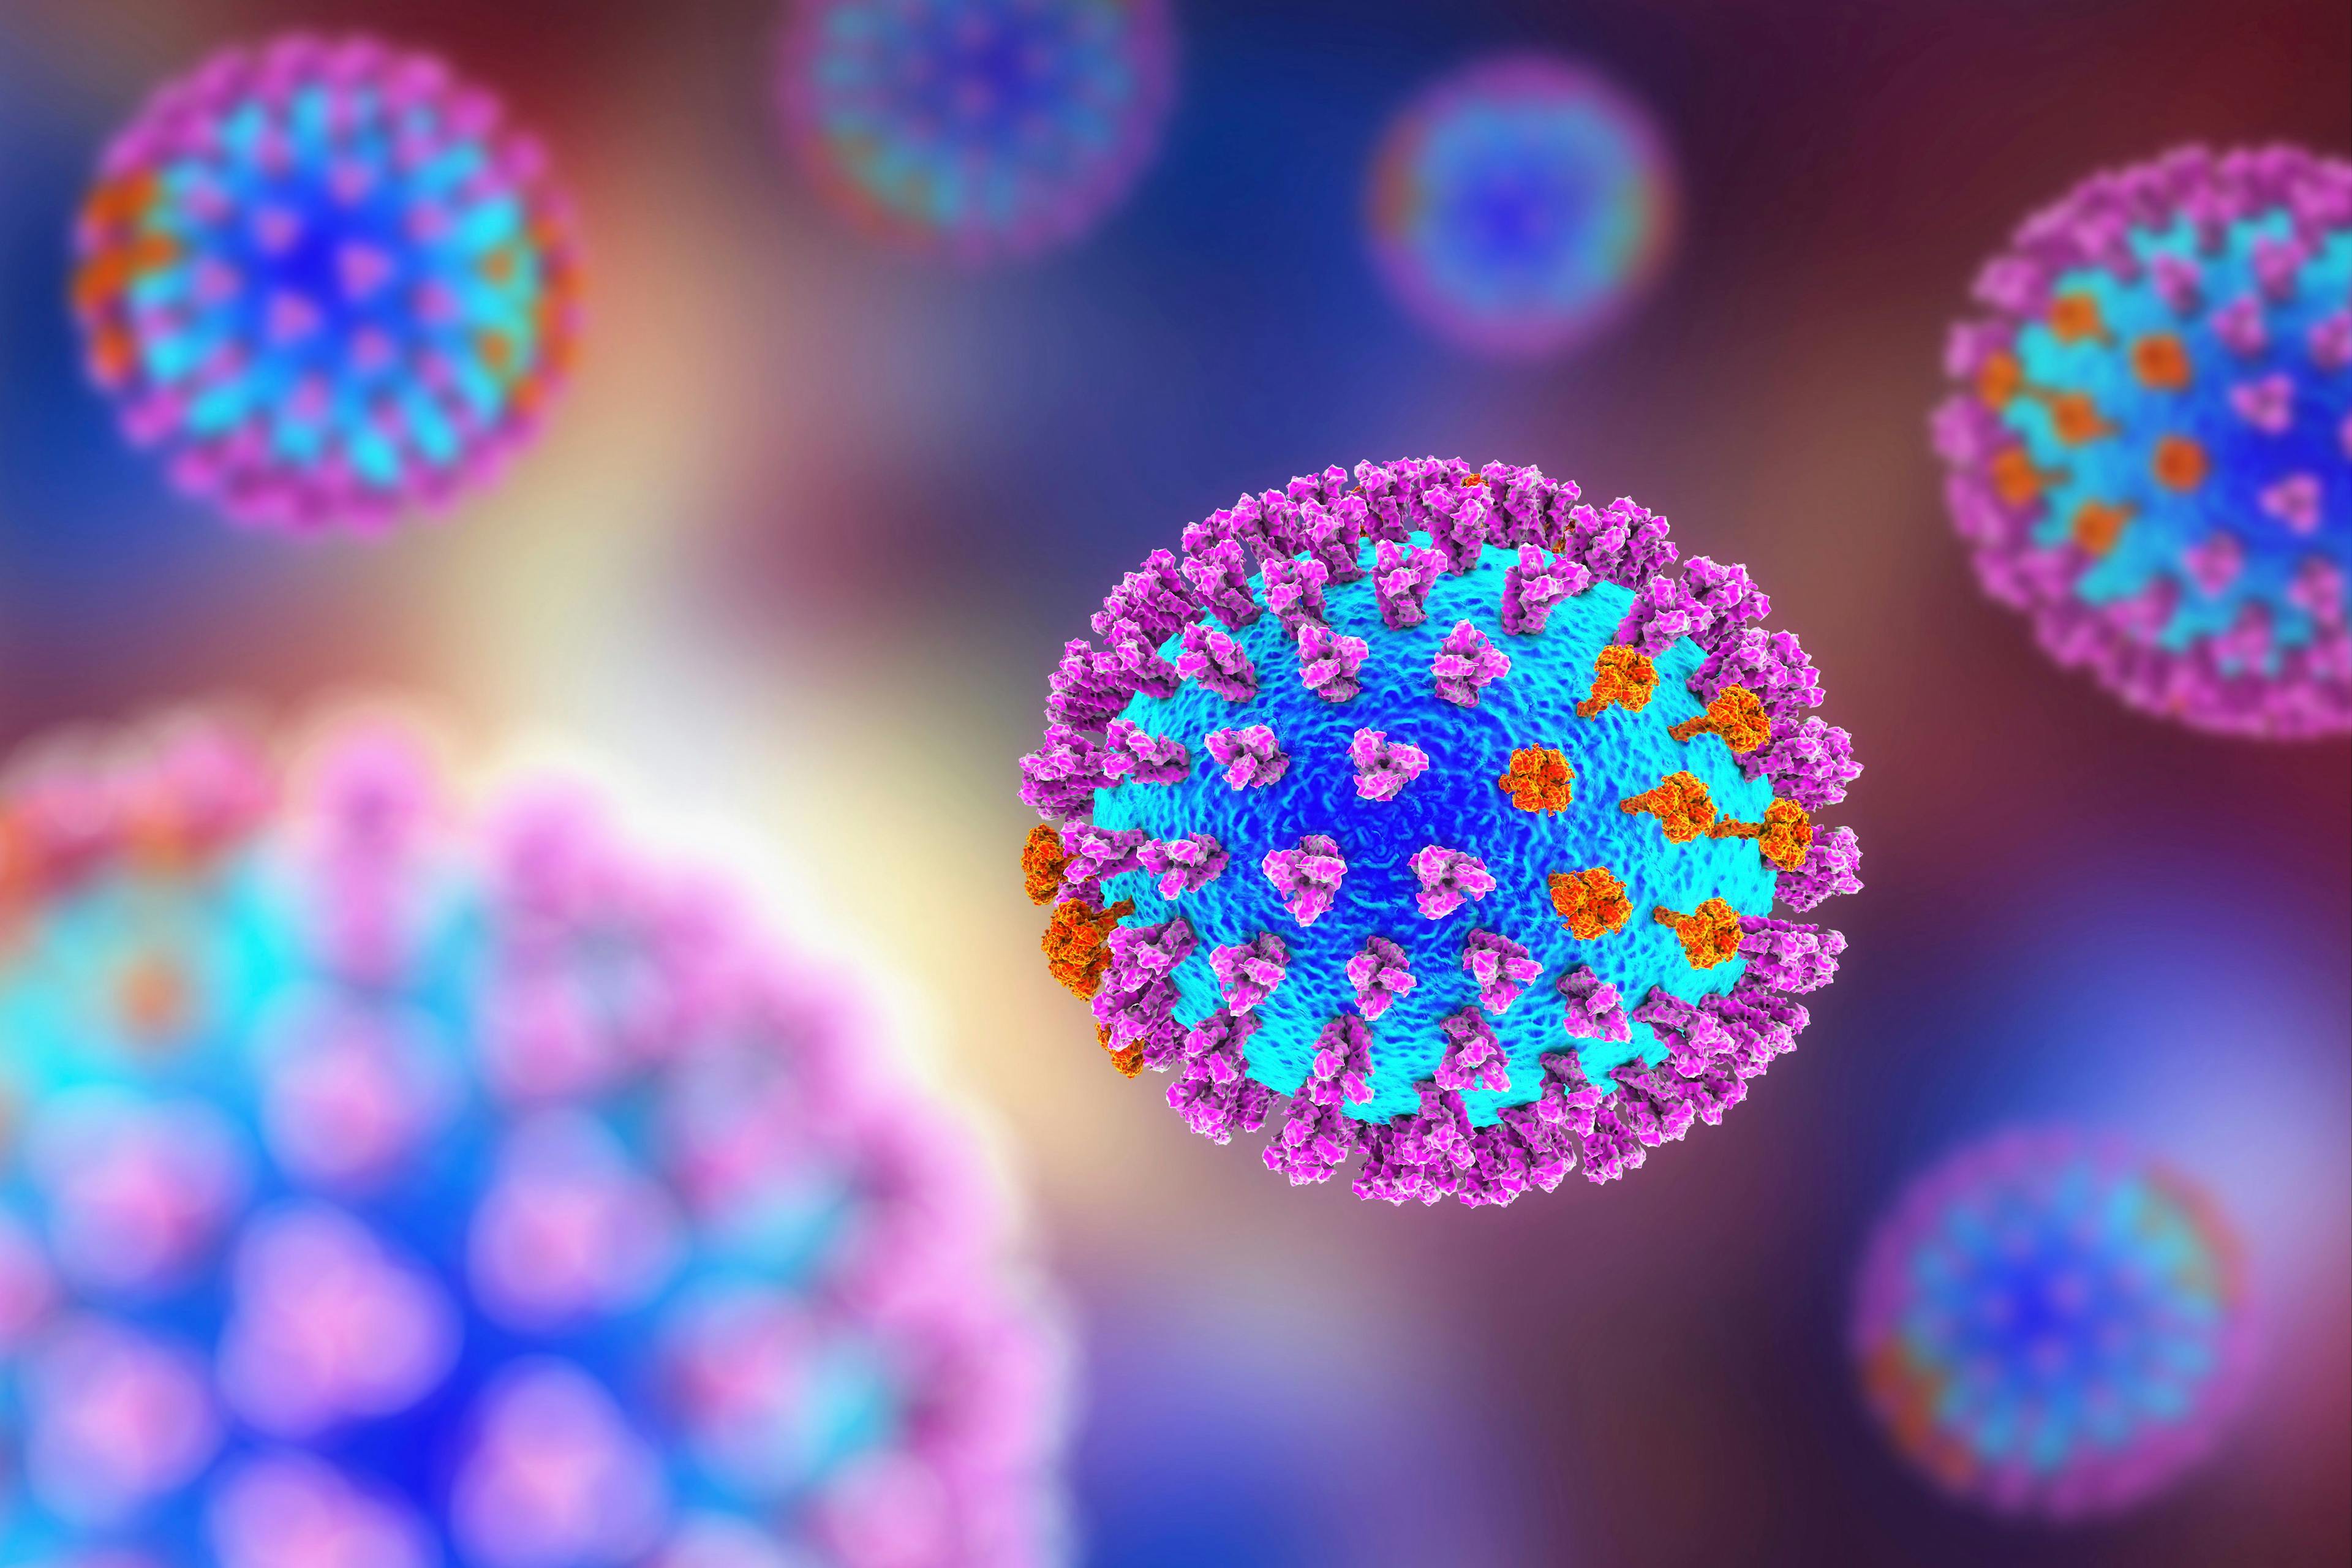 Influenza virus. 3D illustration showing surface glycoprotein spikes hemagglutinin purple and neuraminidase orange | Image Credit: Dr_Microbe - stock.adobe.com